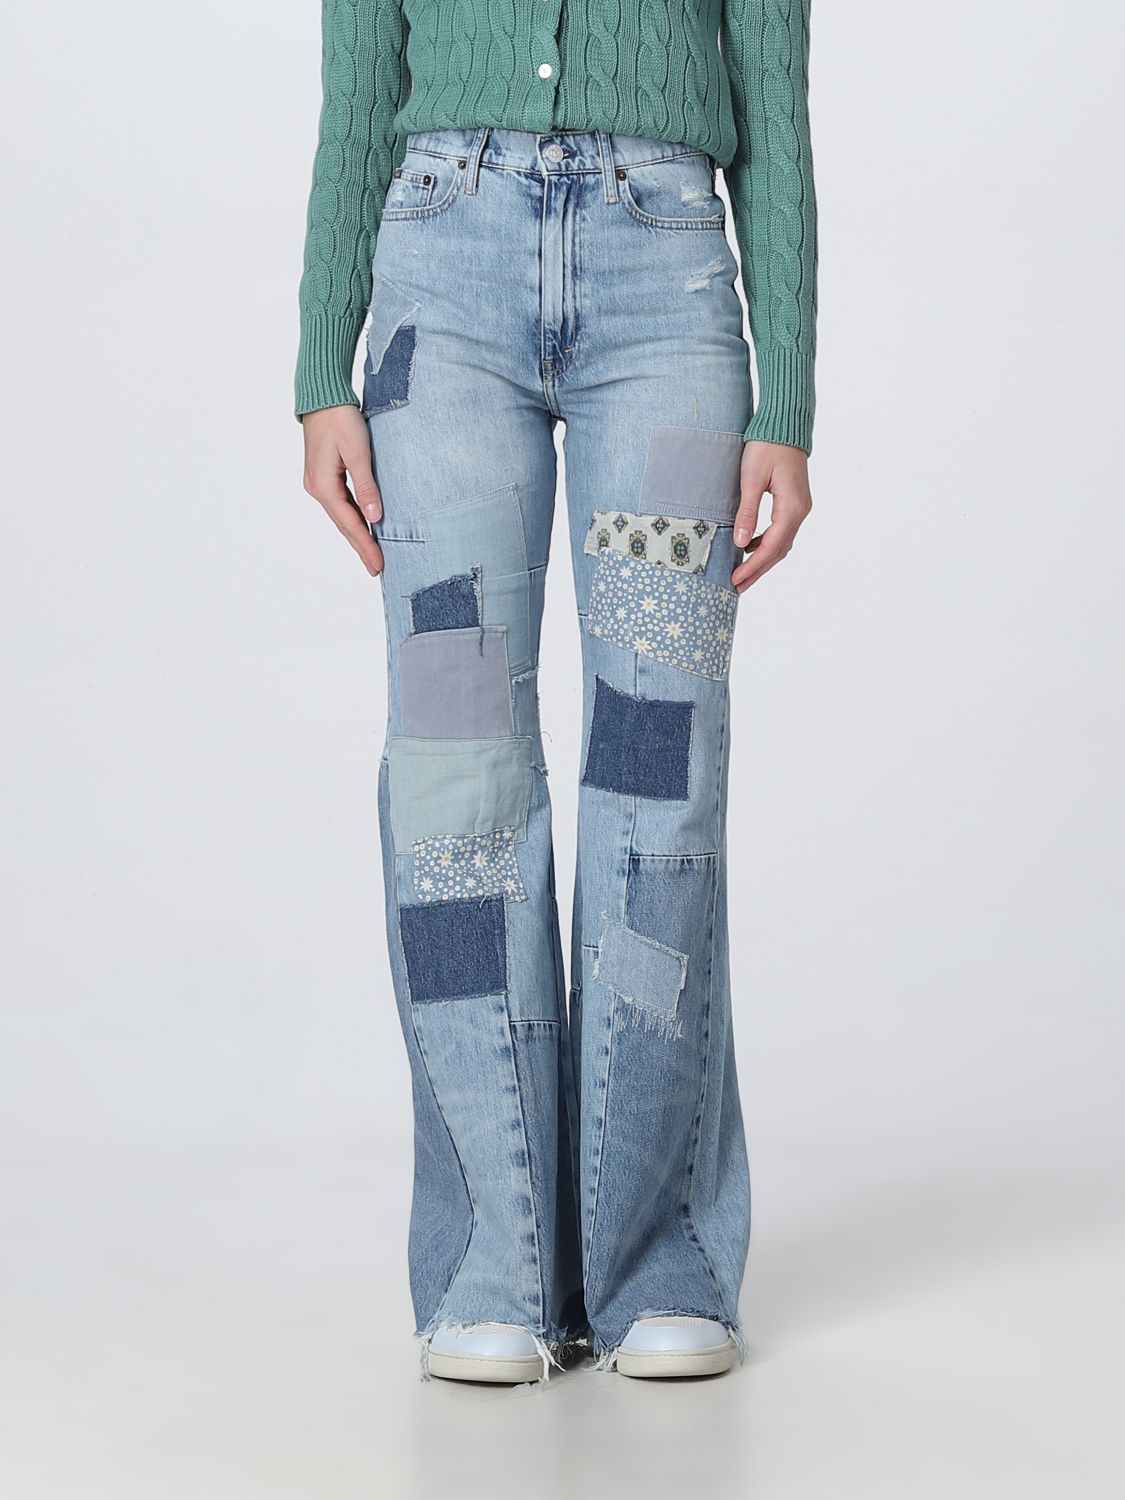 POLO RALPH LAUREN: jeans for woman - Denim | Polo Ralph Lauren jeans  211890856 online on 